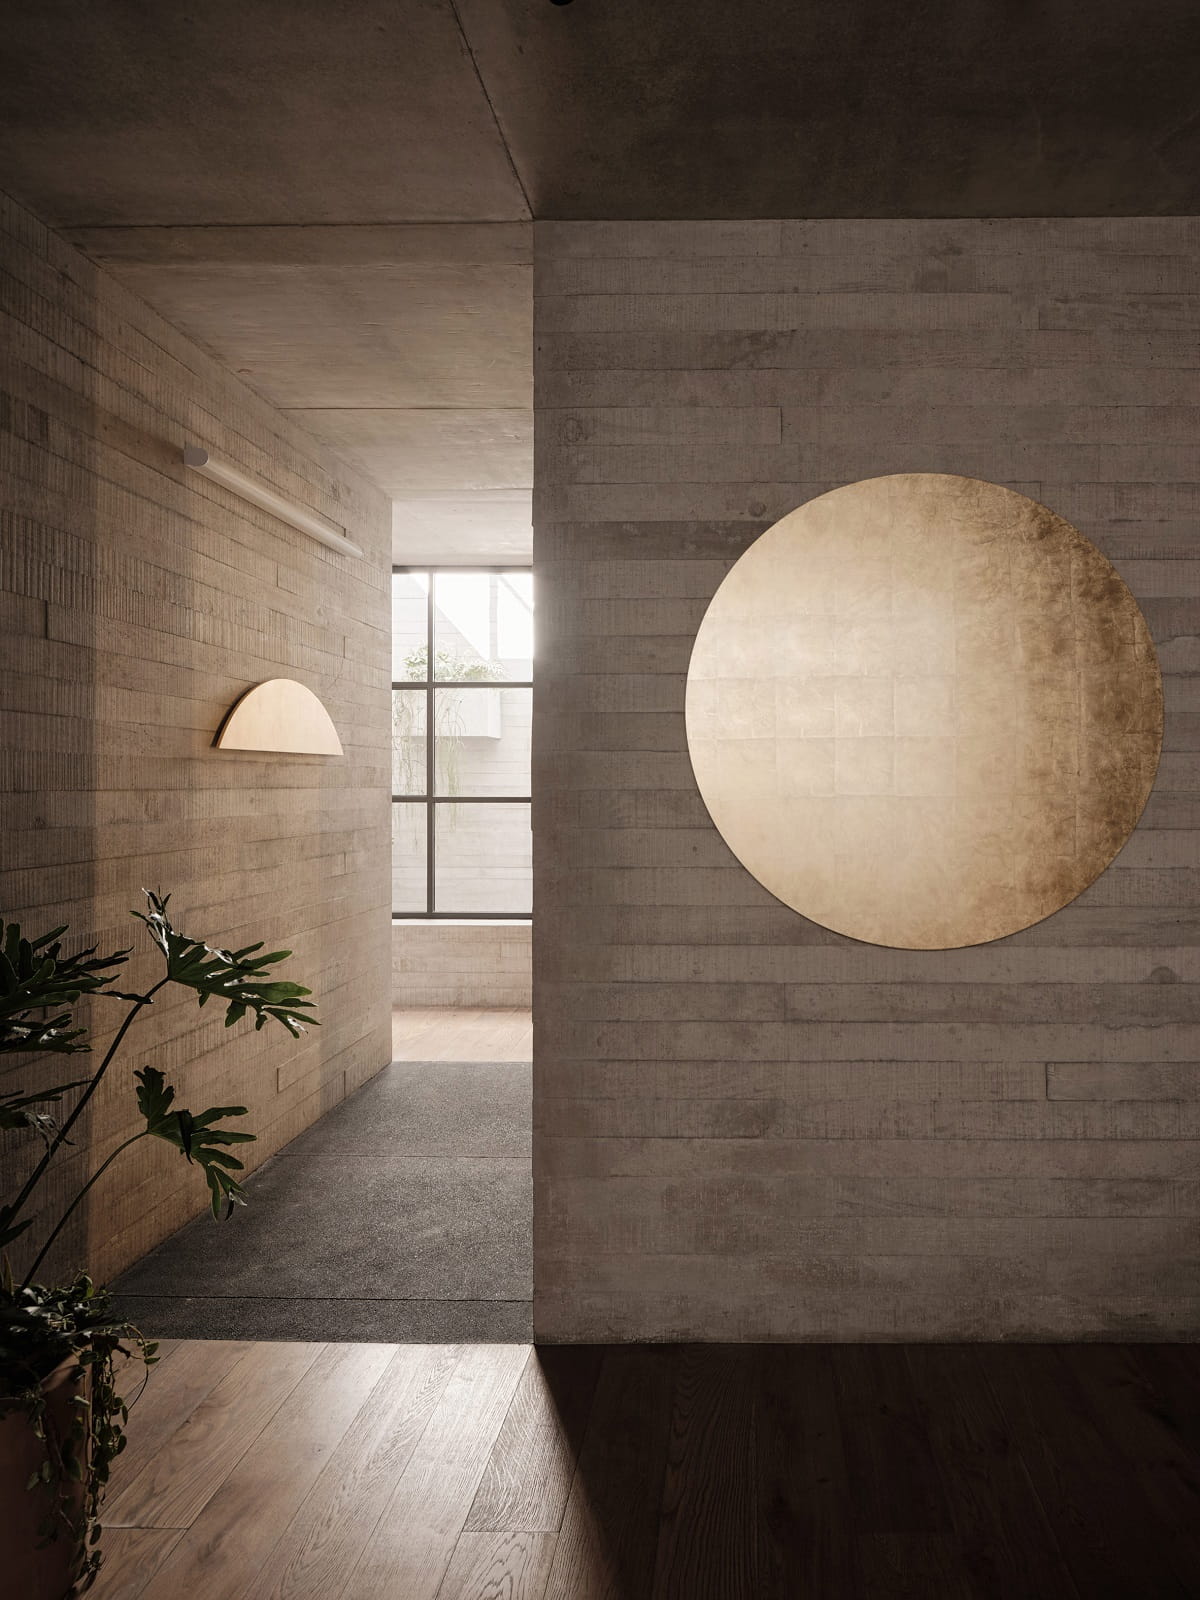 Project: Tennyson 205. Architects: Studio Rick Joy. Lighting Designers: Concept Lighting Lab. Location: Mexico City, Mexico. Photographer: Joe Fletcher